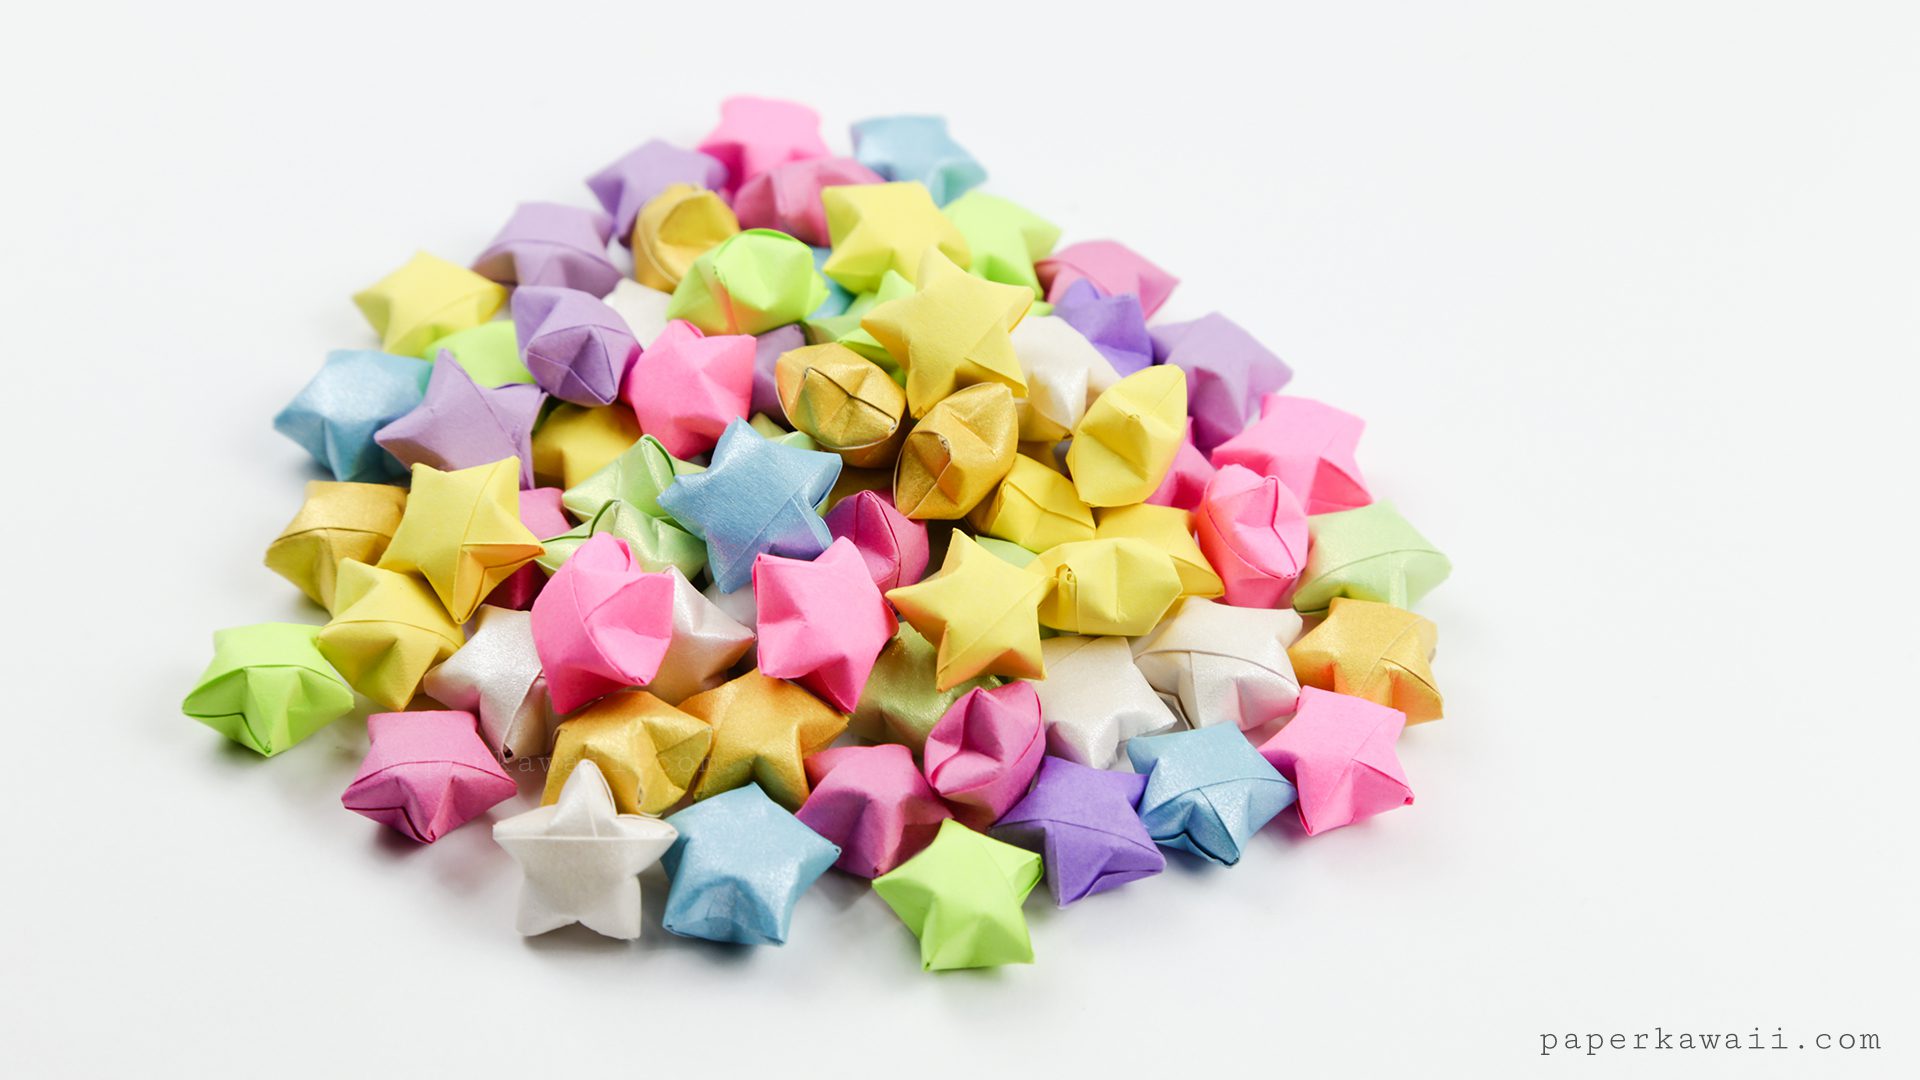 Origami Lucky Stars Tutorial - Easy & Fun!